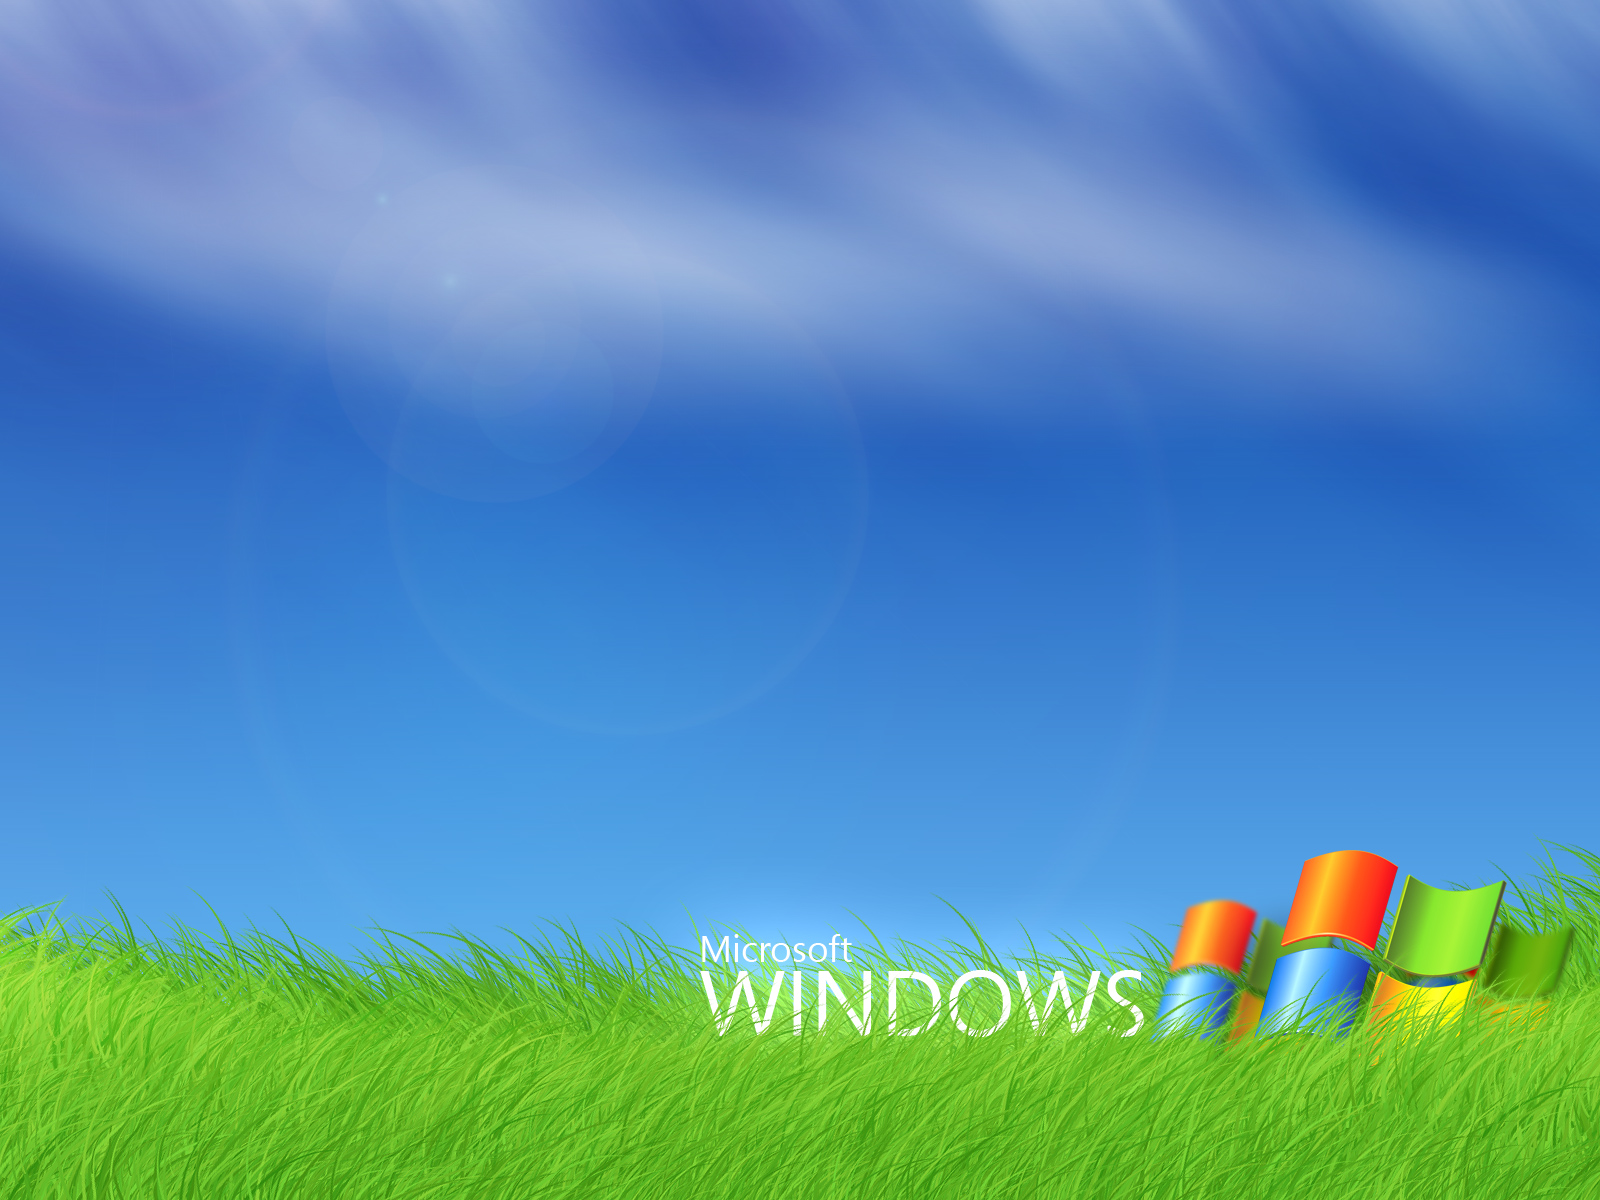 Microsoft Windows Wallpapers HD Wallpapers